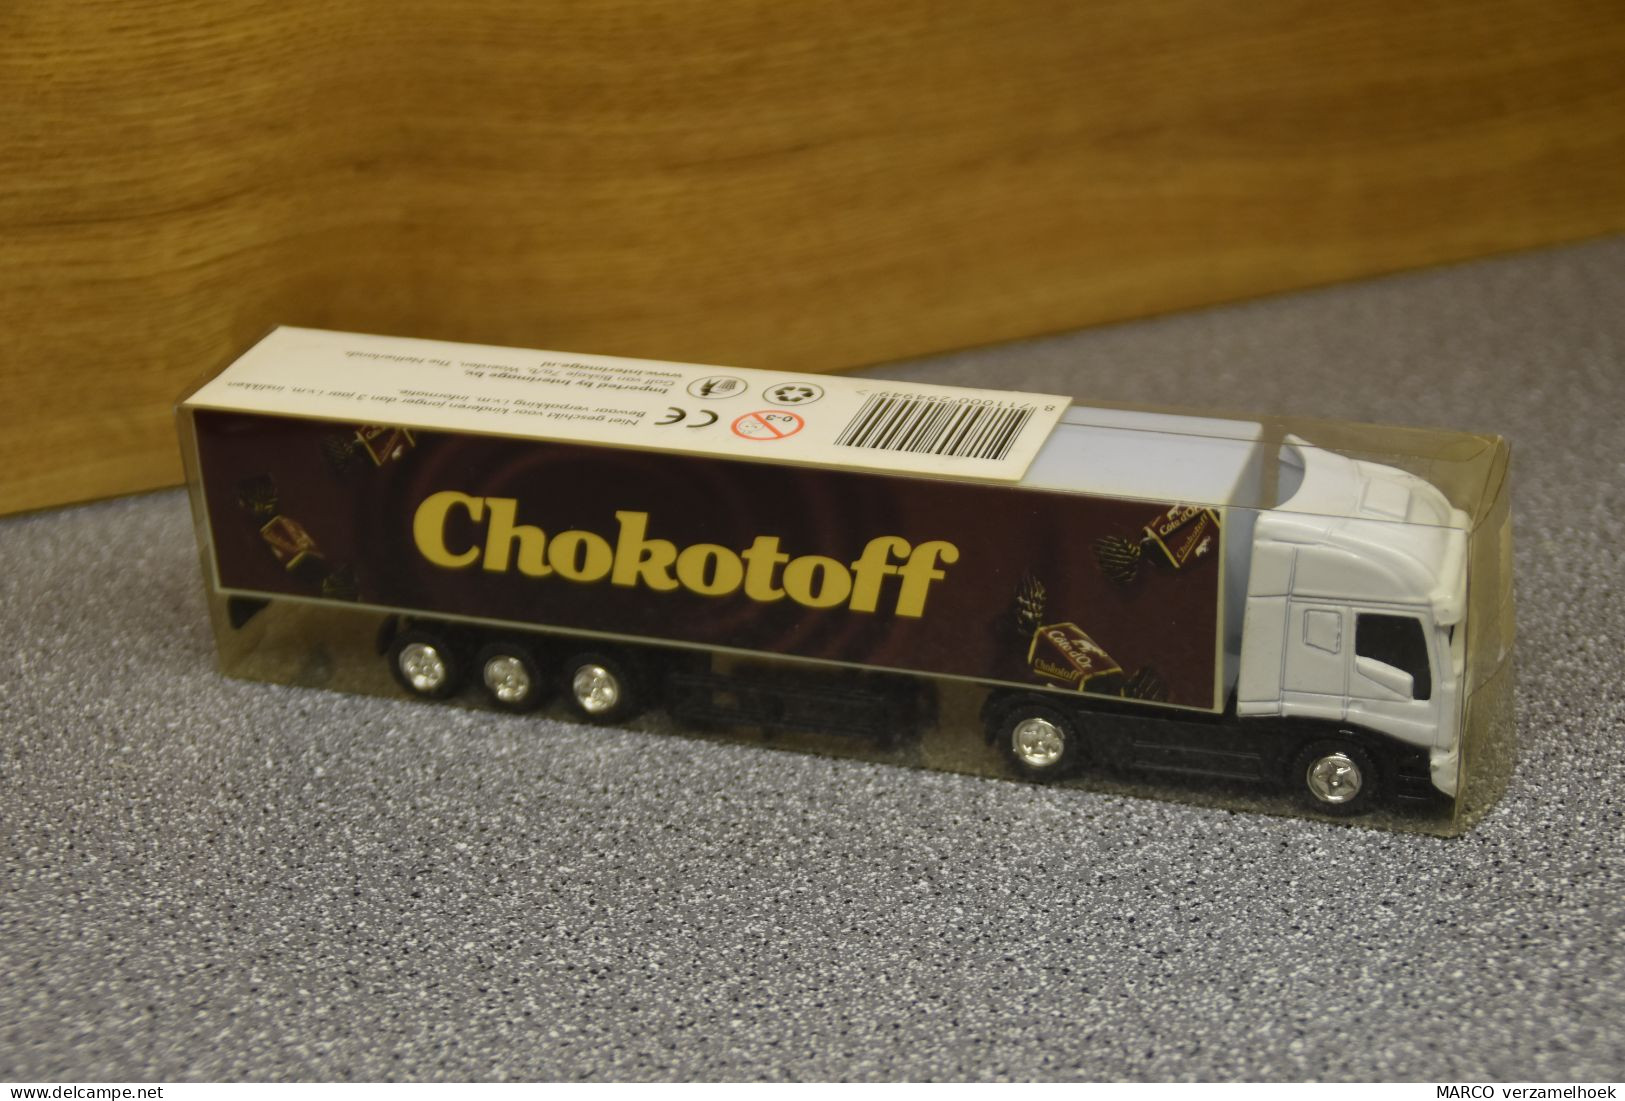 Vrachtwagen-truck Interimage Woerden (NL) Scale 1:87 Chokotoff - Echelle 1:87